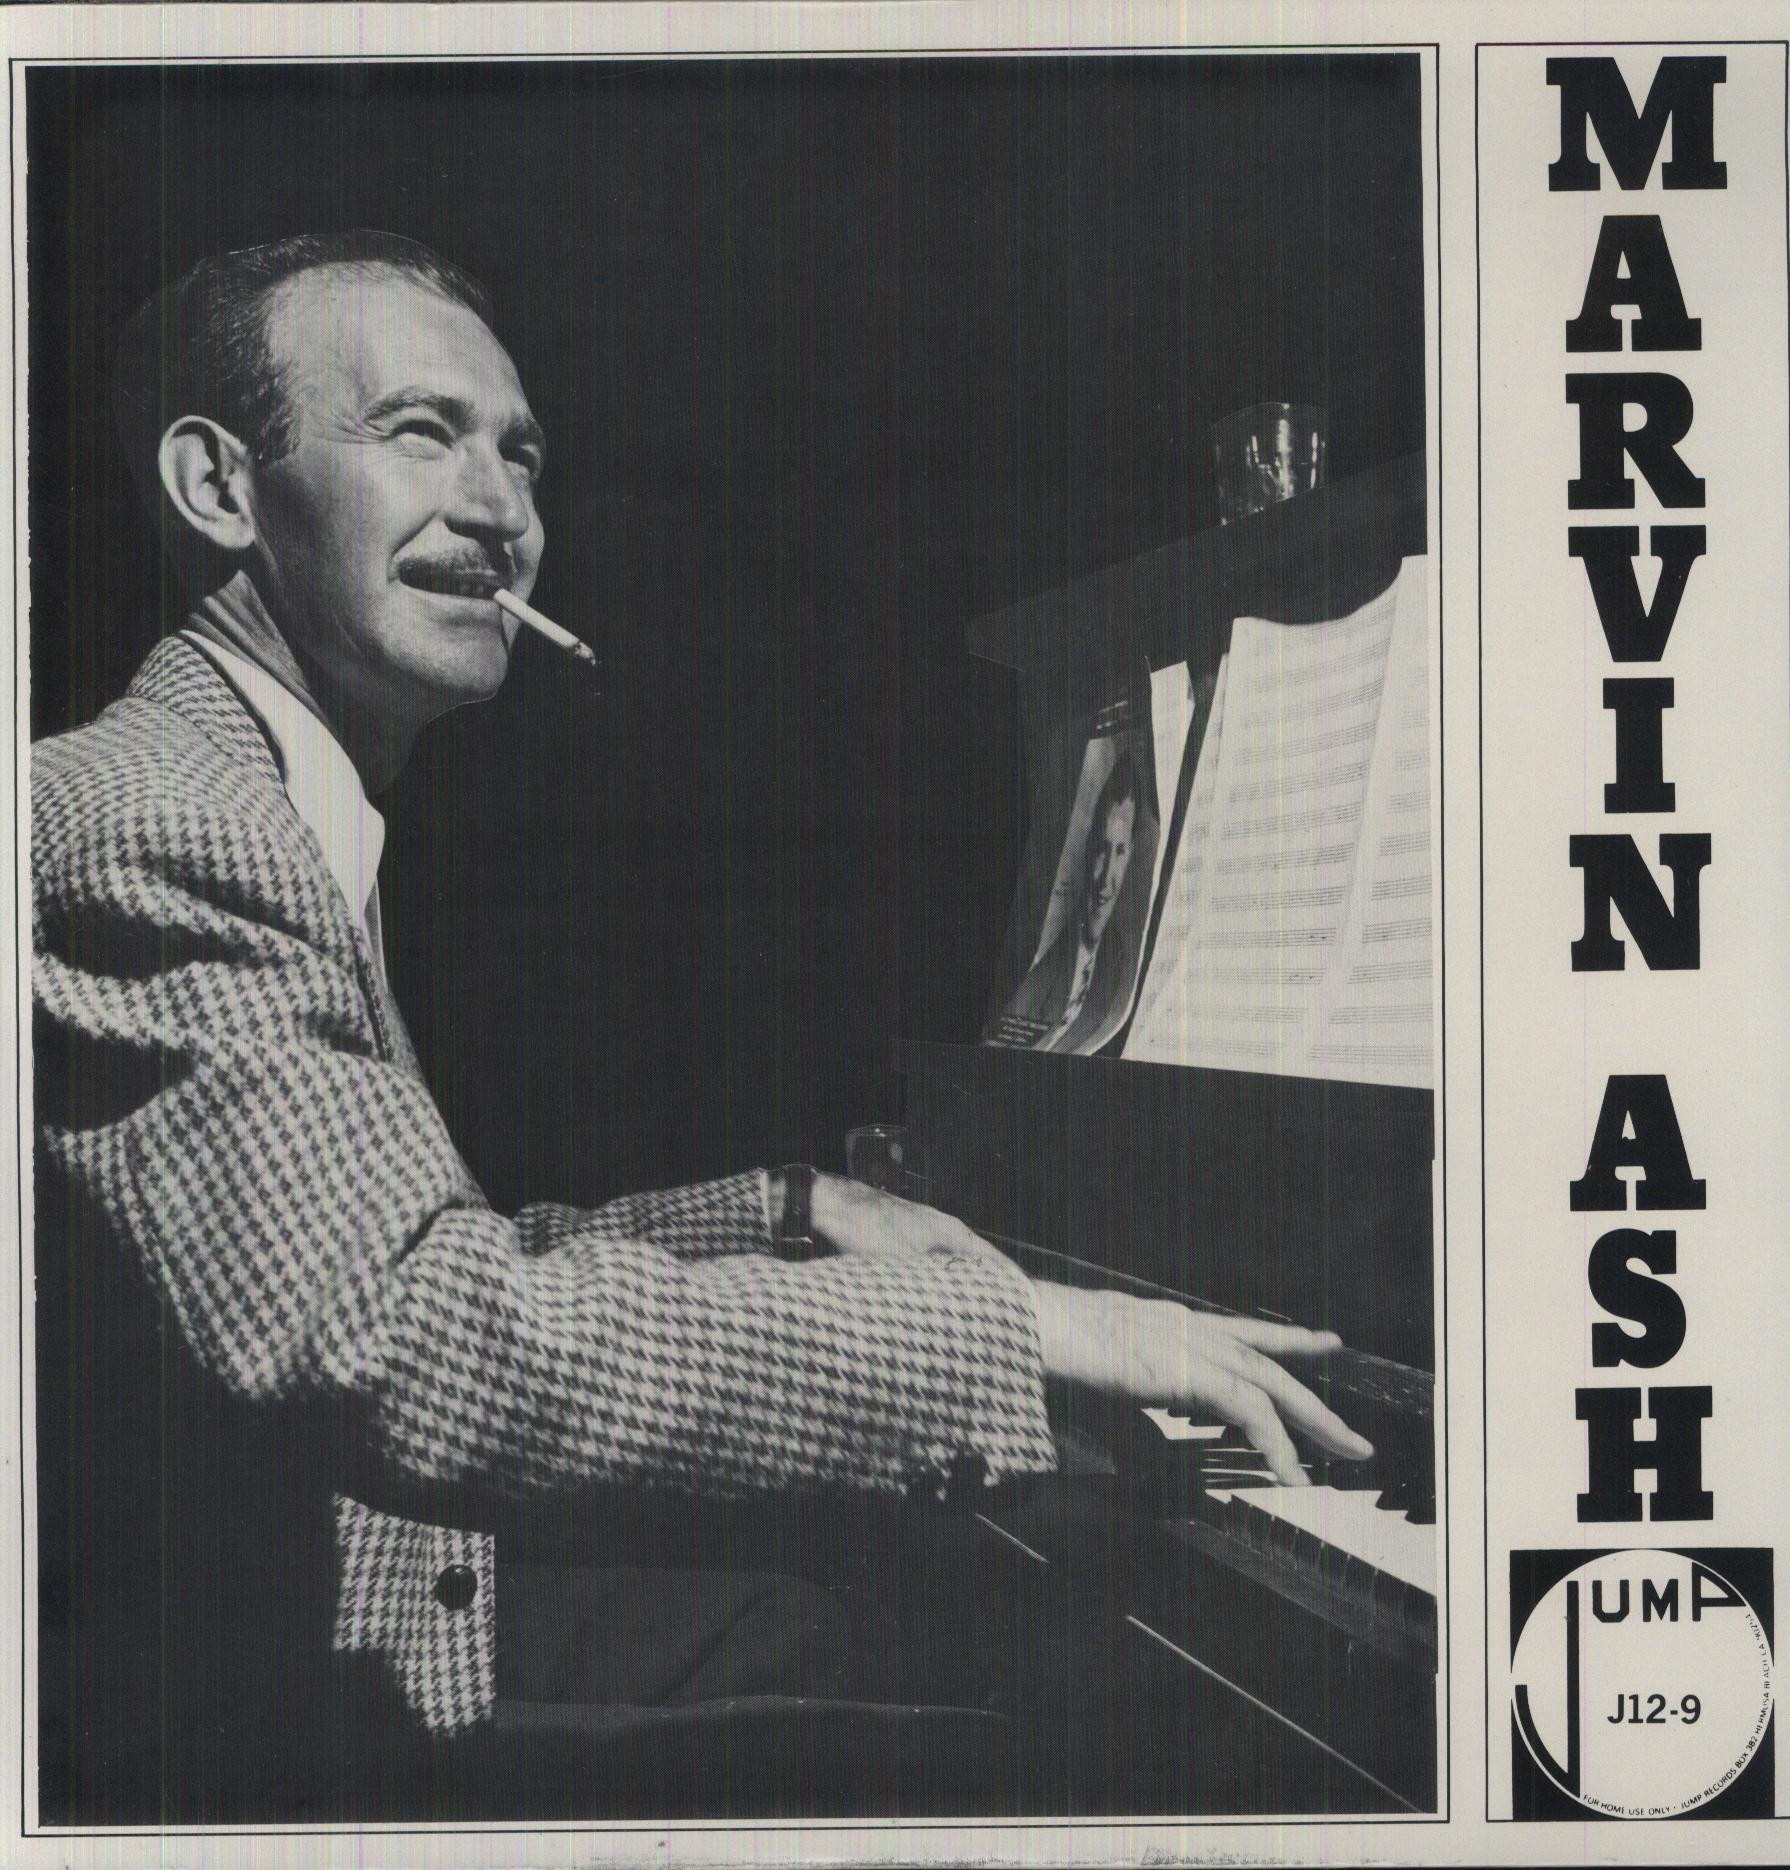 MARVIN ASH